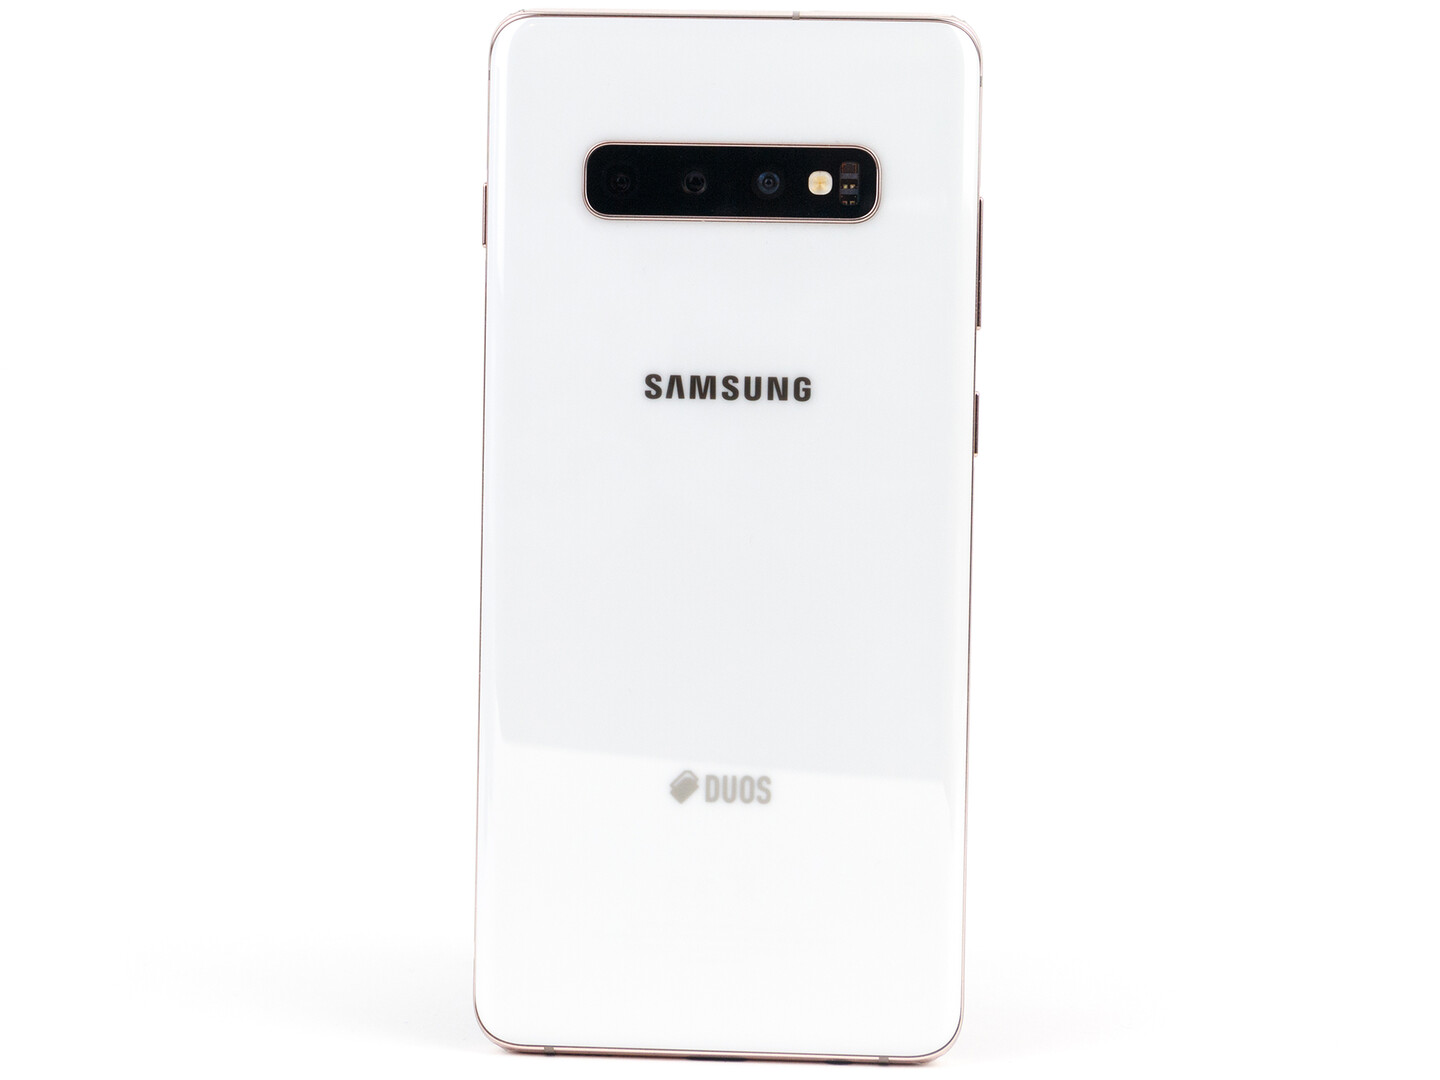 Samsung Galaxy S10 Plus Ceramic White Unboxing